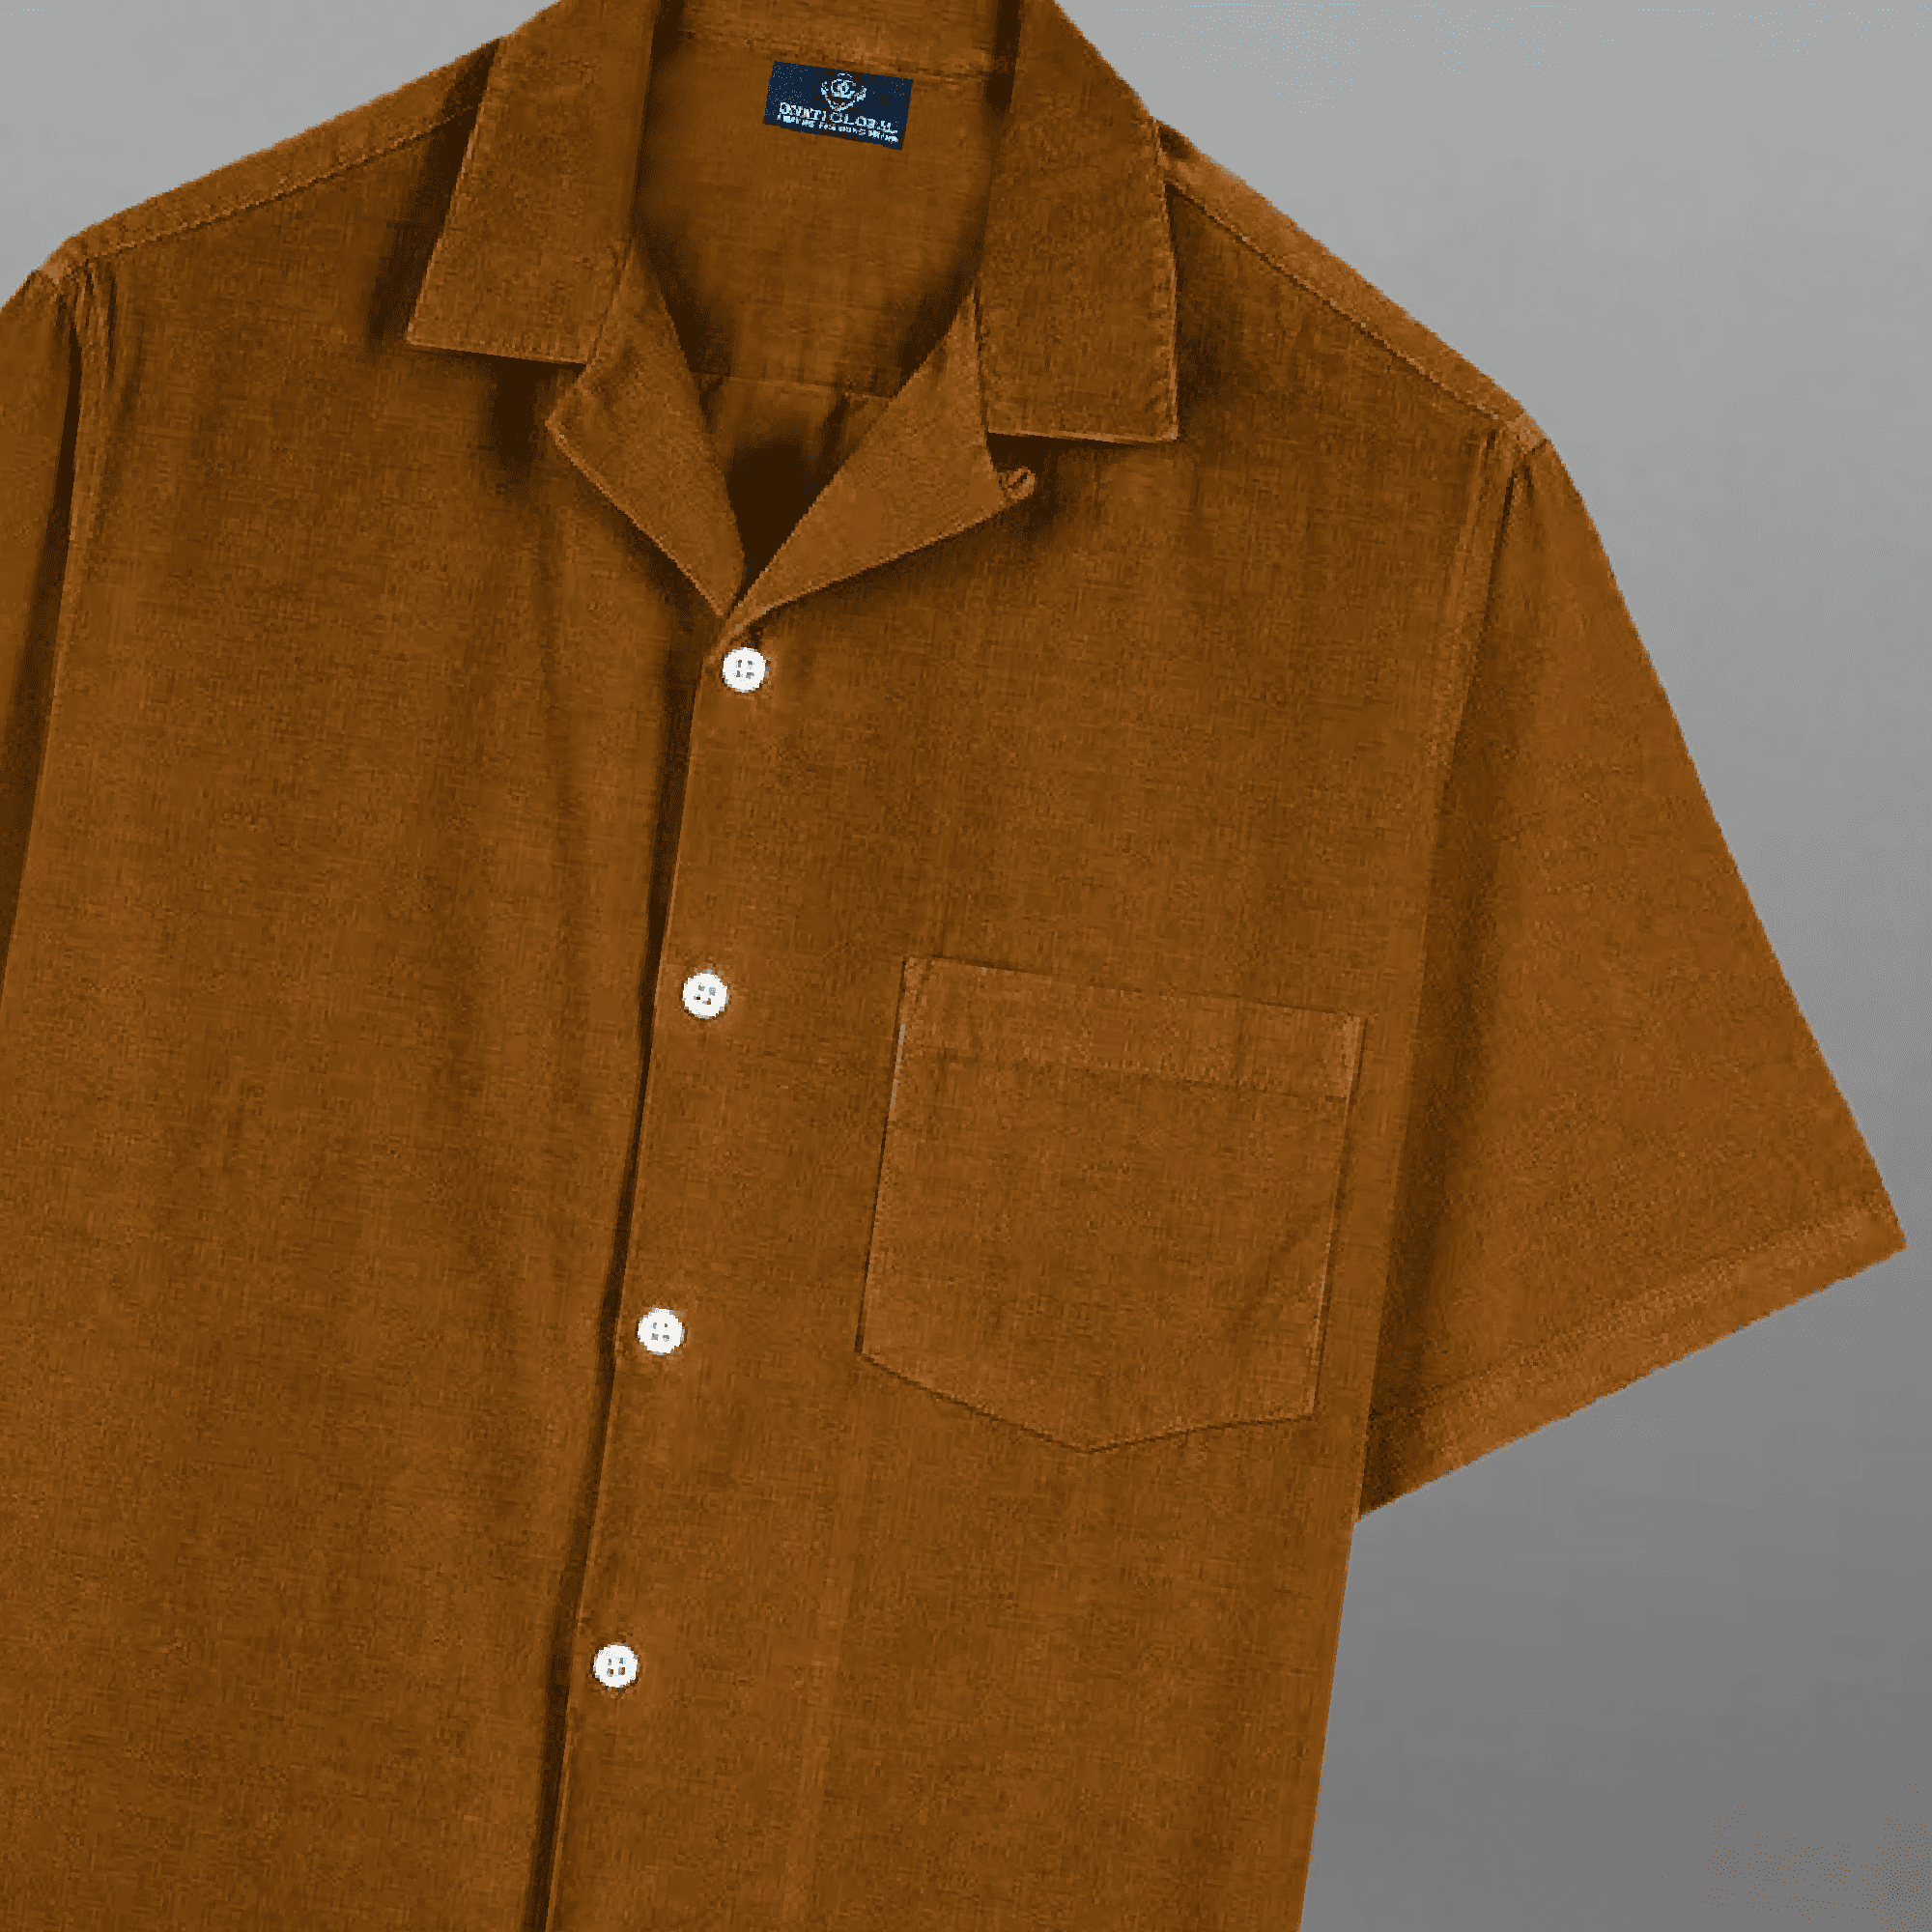 Men's Mud Brown Corduroy Camp Collar Shirt with a Pocket-RMS045